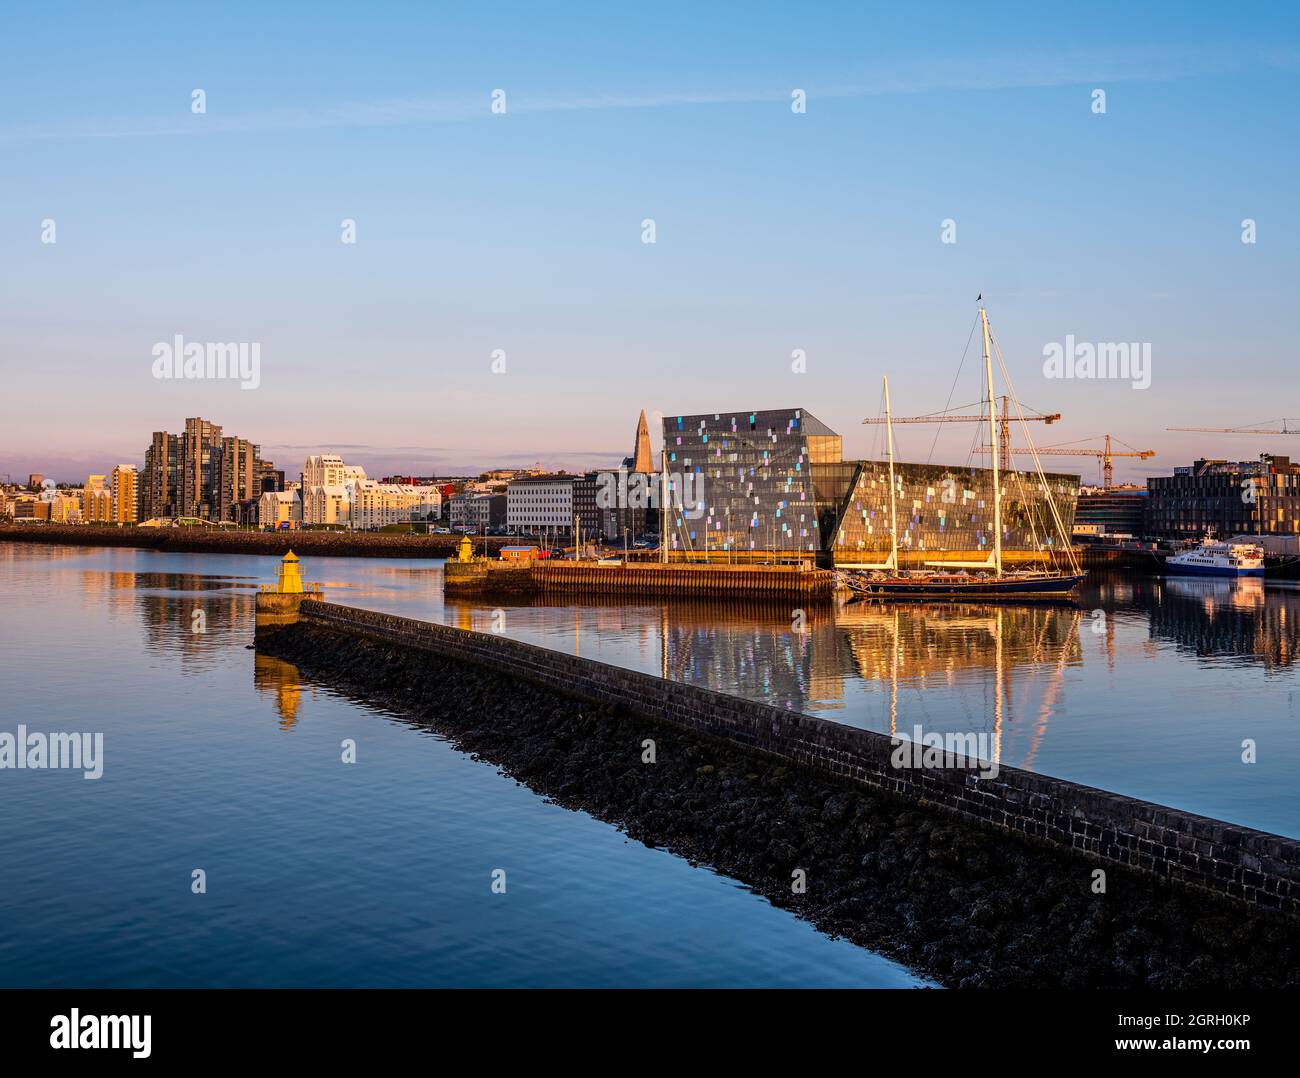 Reykjavik harbor and city center at sunset. Stock Photo